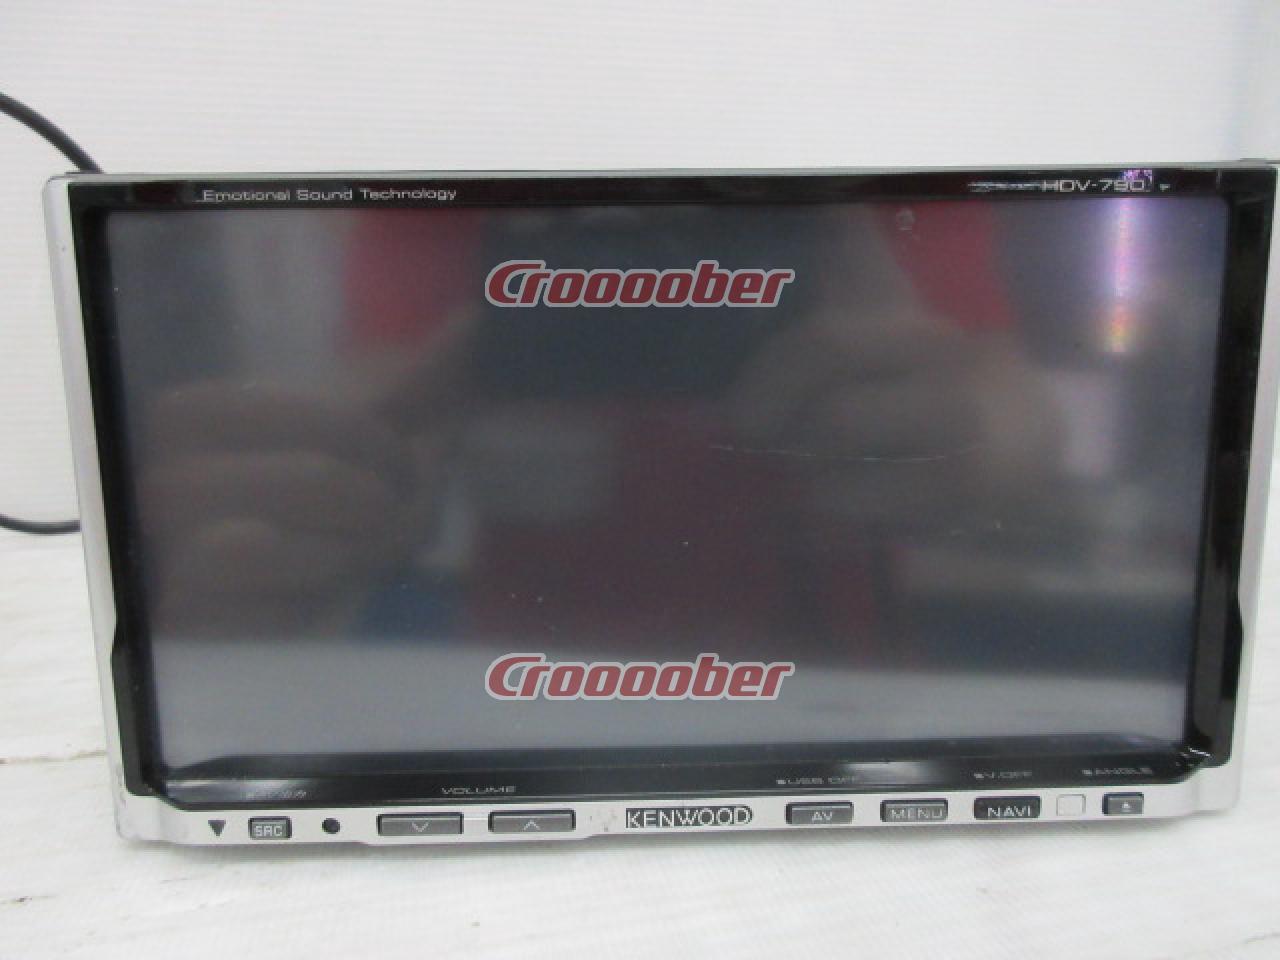 Kenwood HDV-790 | HDD Navigation(analog) | Croooober